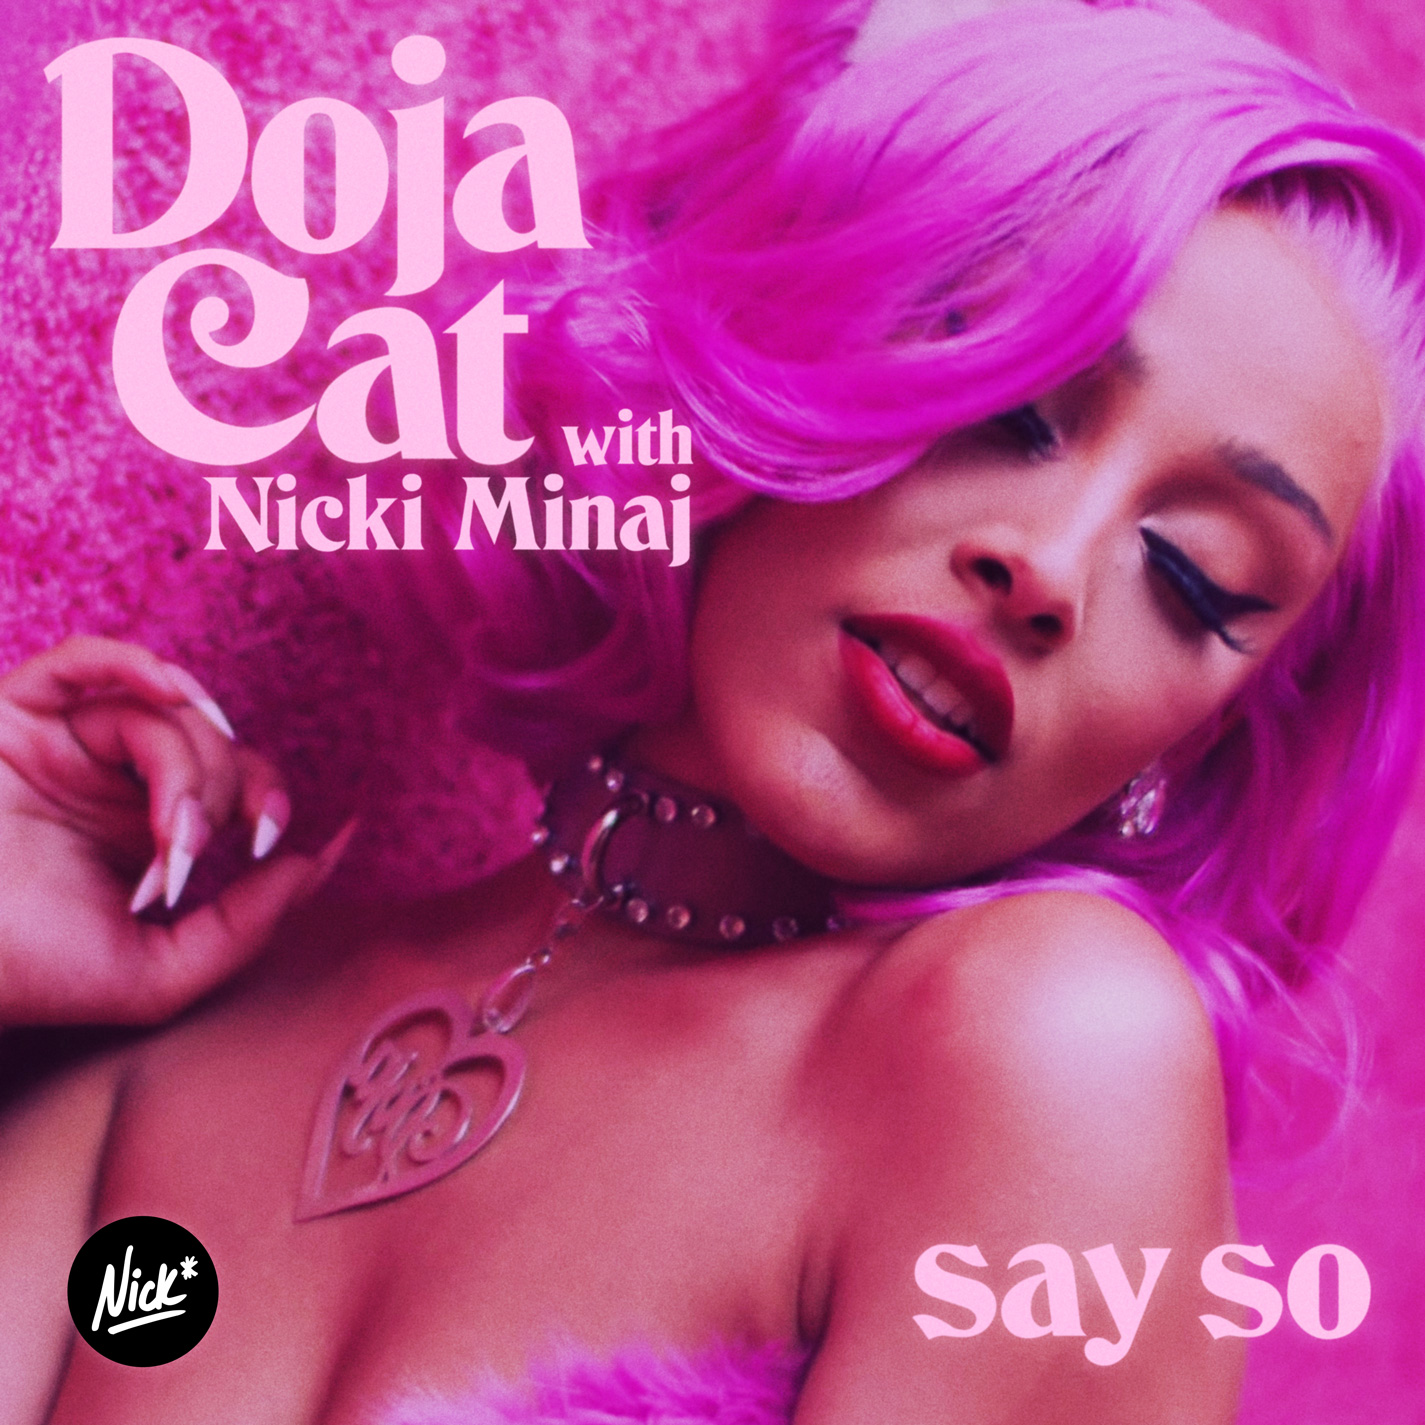 Doja Cat & Nicki Minaj - Say So Nick* Hot Pink Remix